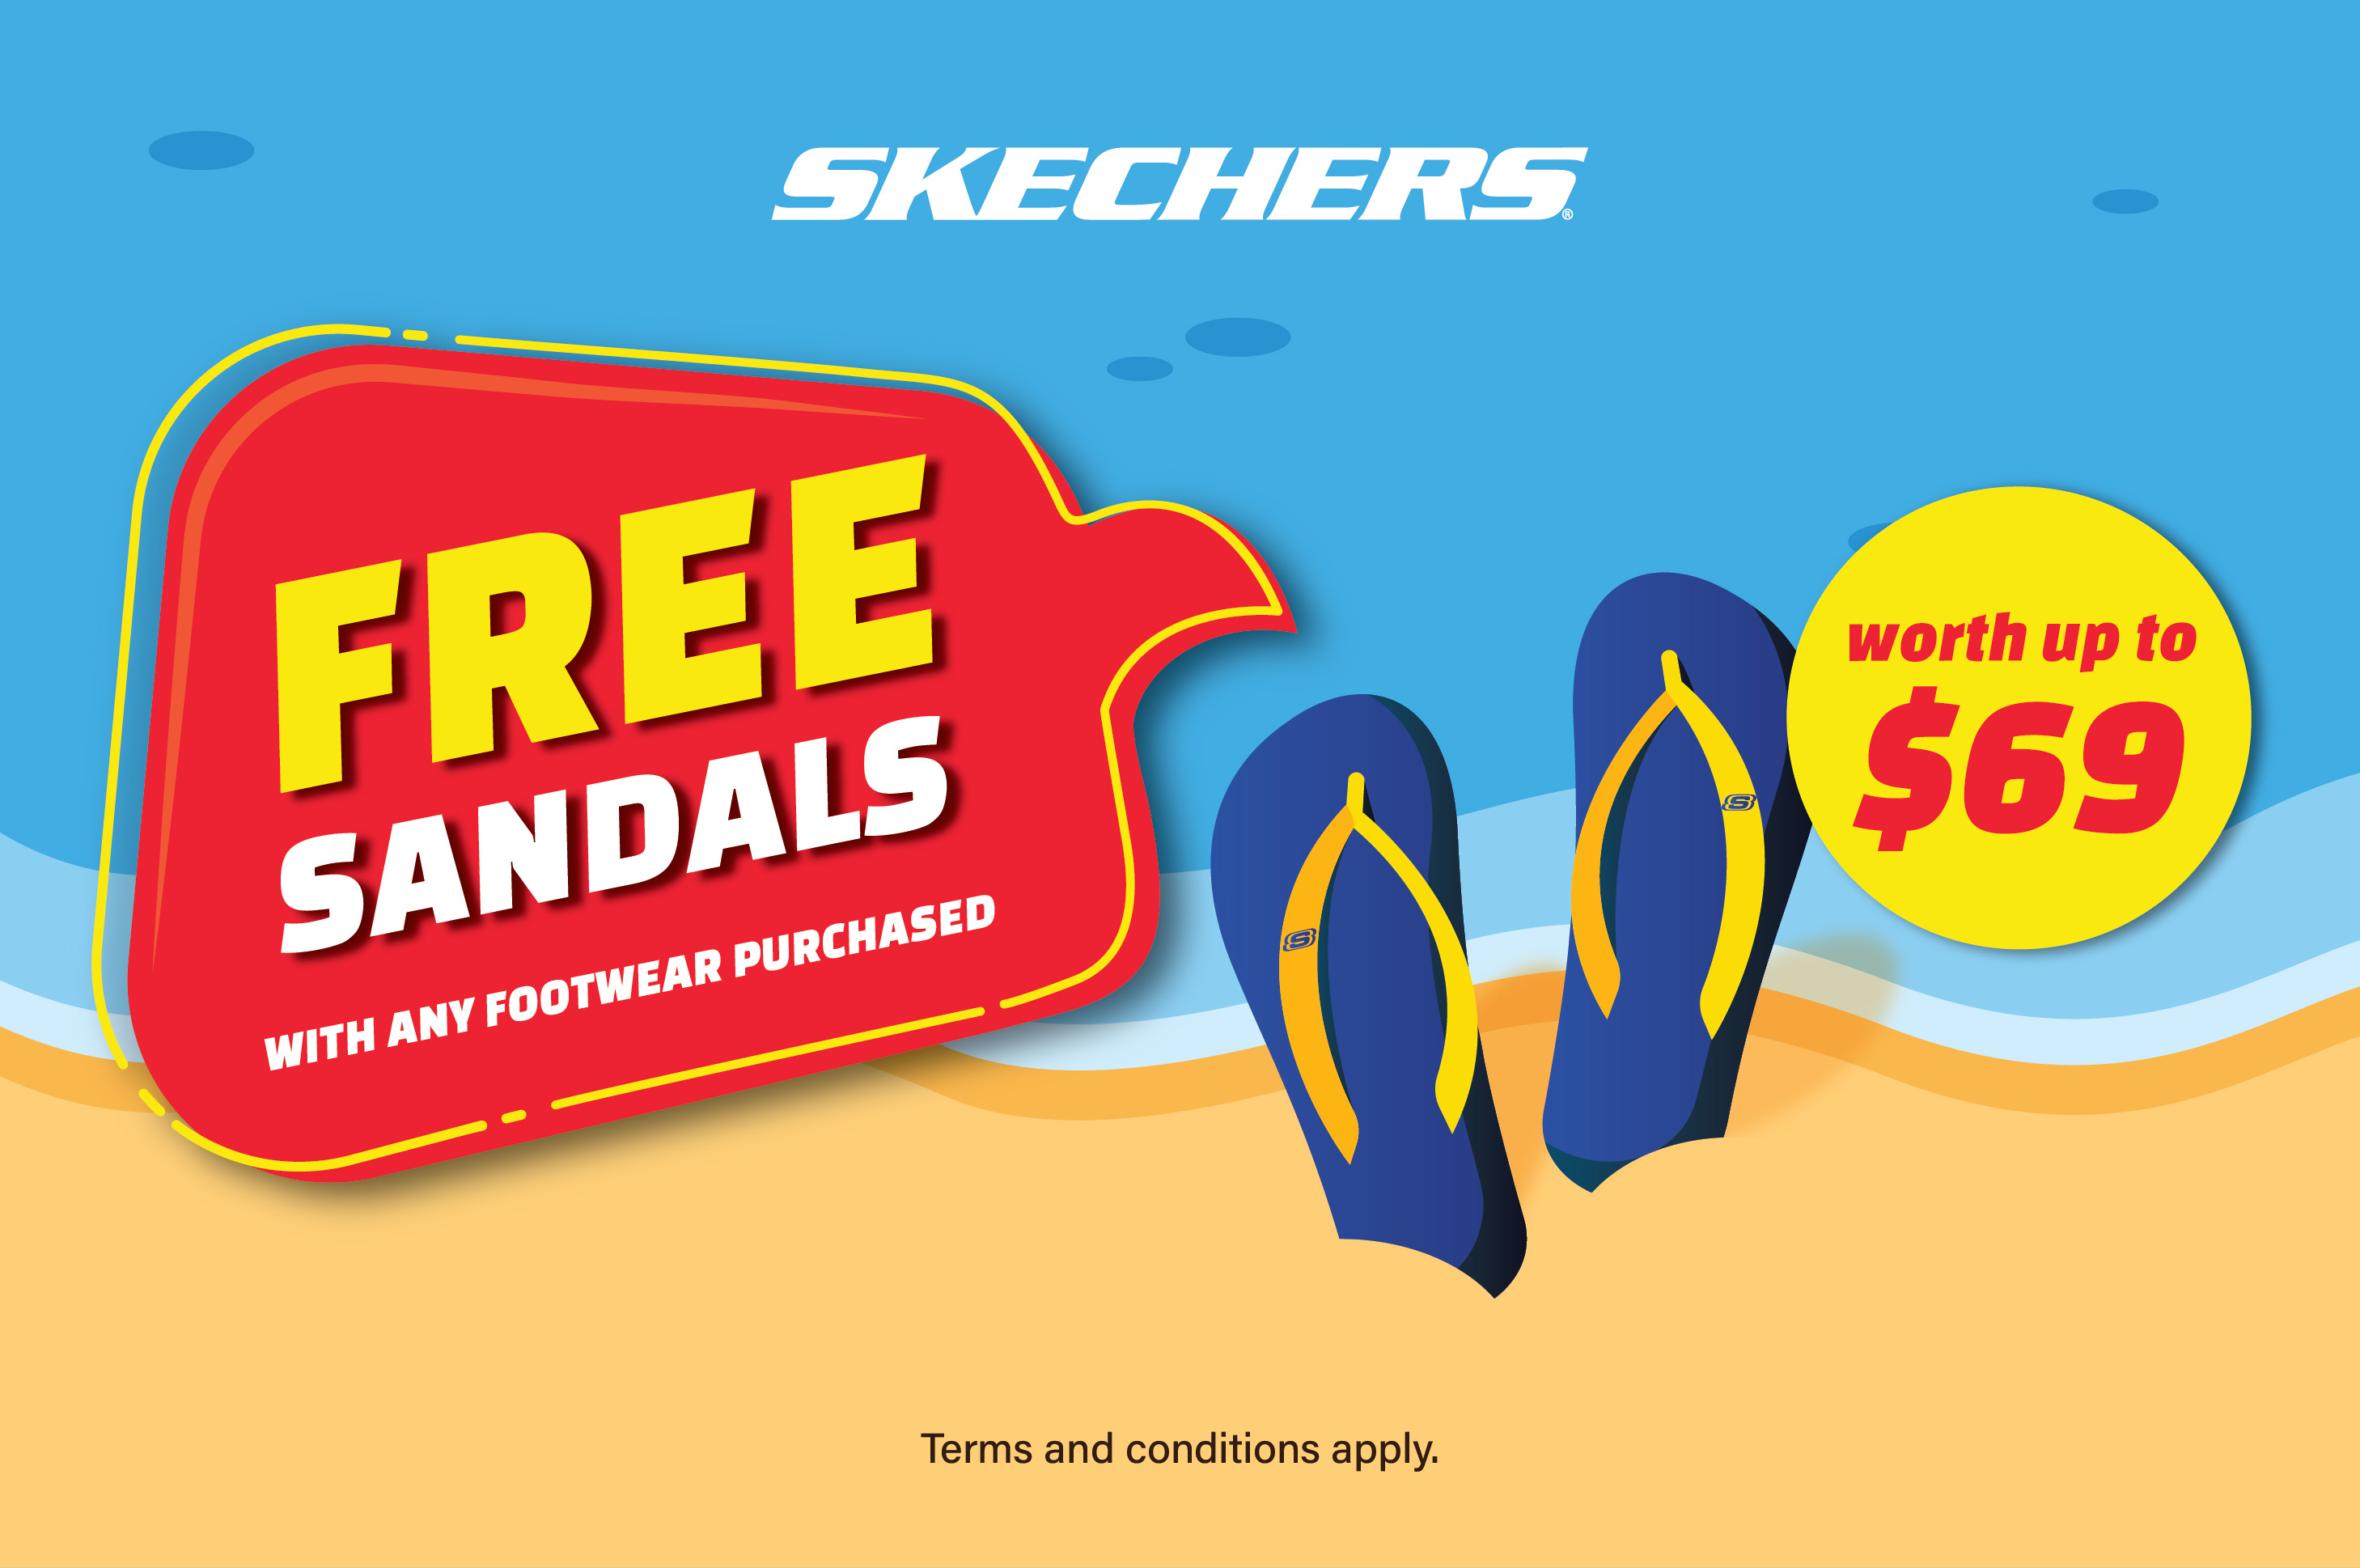 Skechers_free_sandals_11%20Sept_JEWEL_700x465.jpg